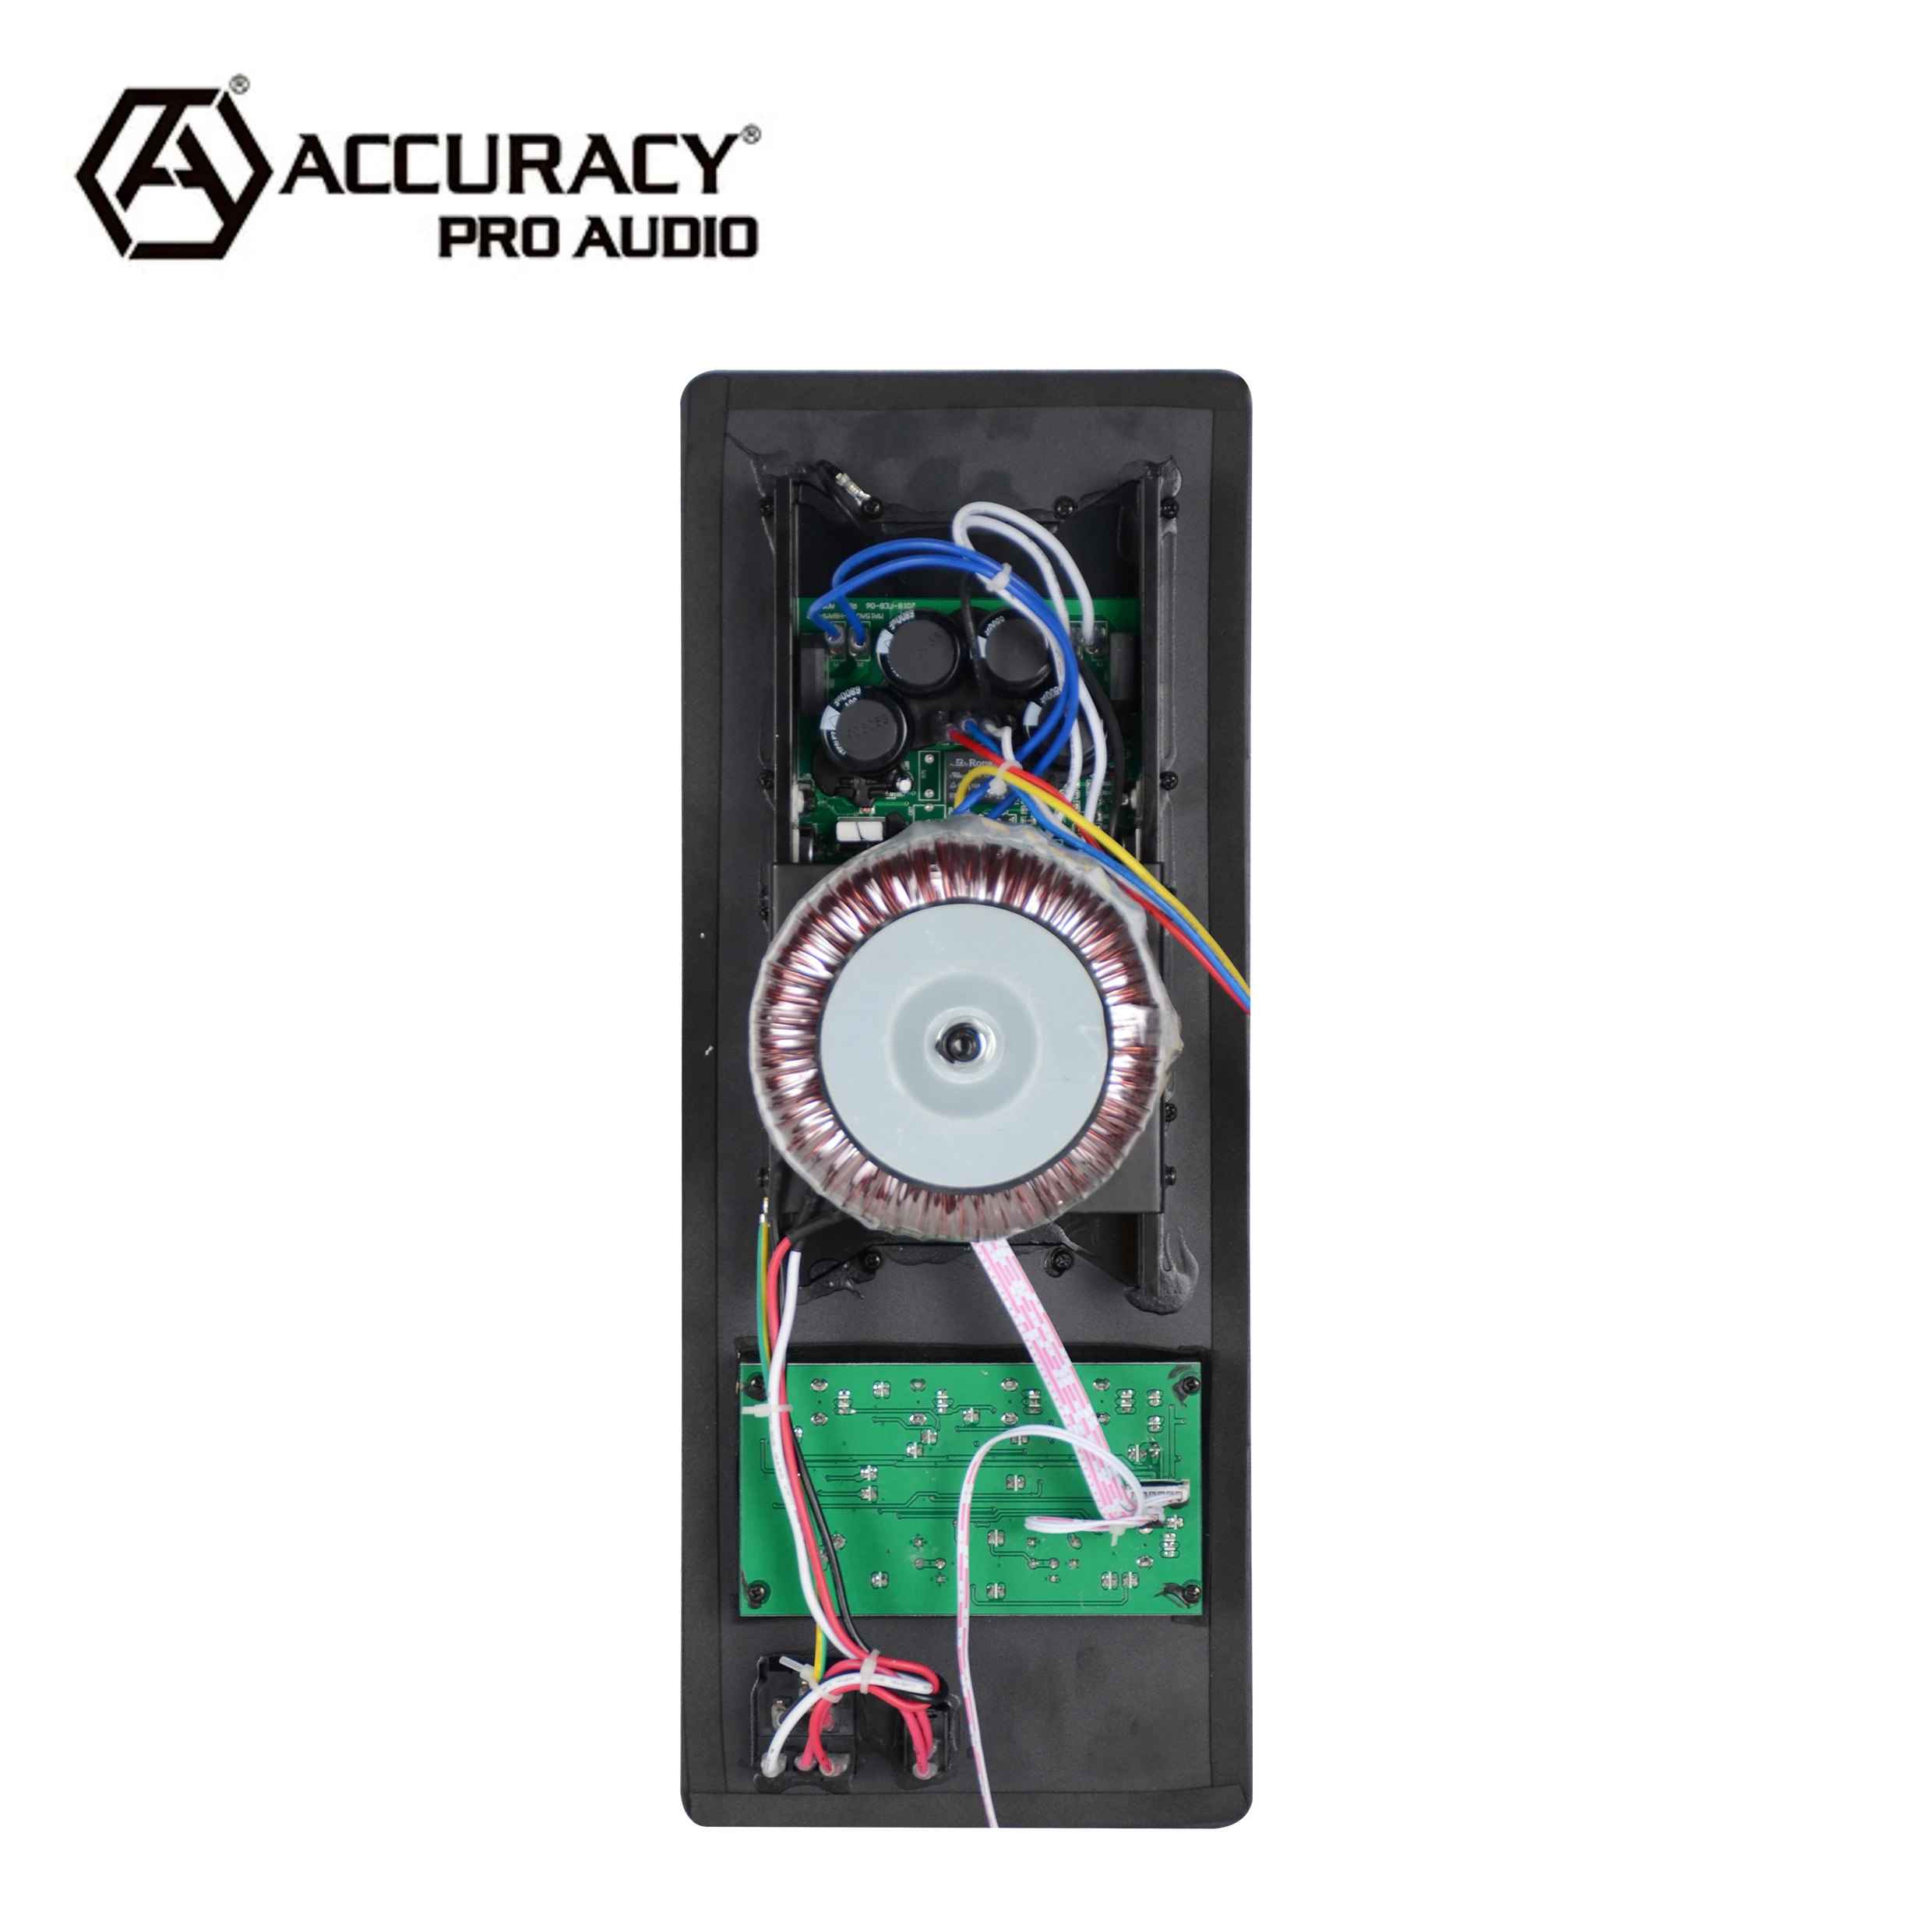 Accuracy Pro Audio 15APC Professional Active Speaker Amplifier Module